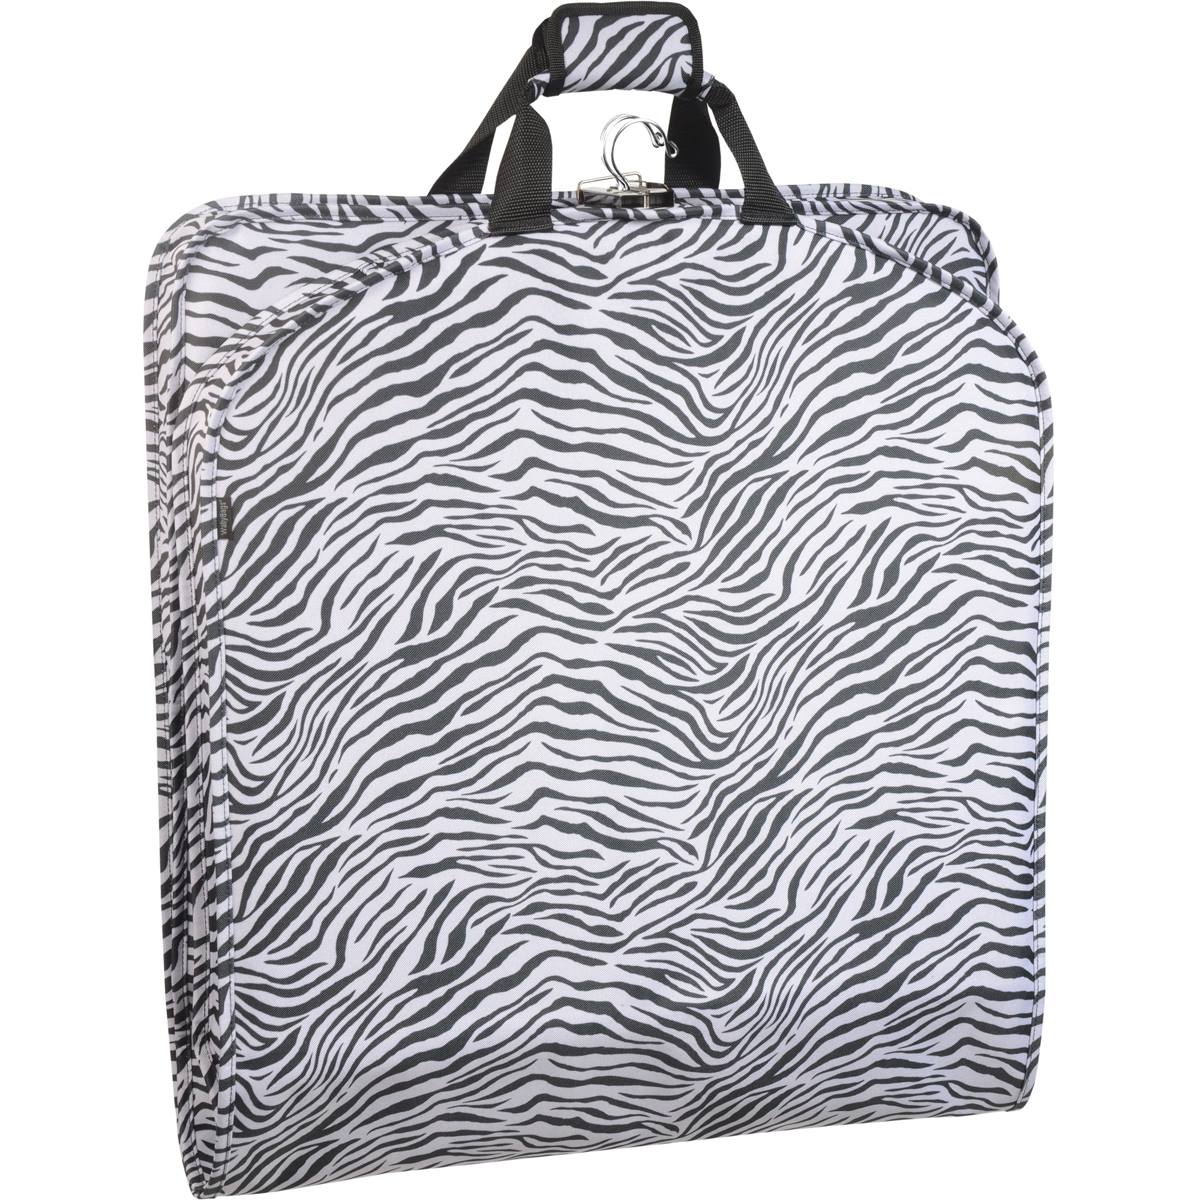 WallyBags(R) 52 Deluxe Travel Zebra Pattern Garment Bag